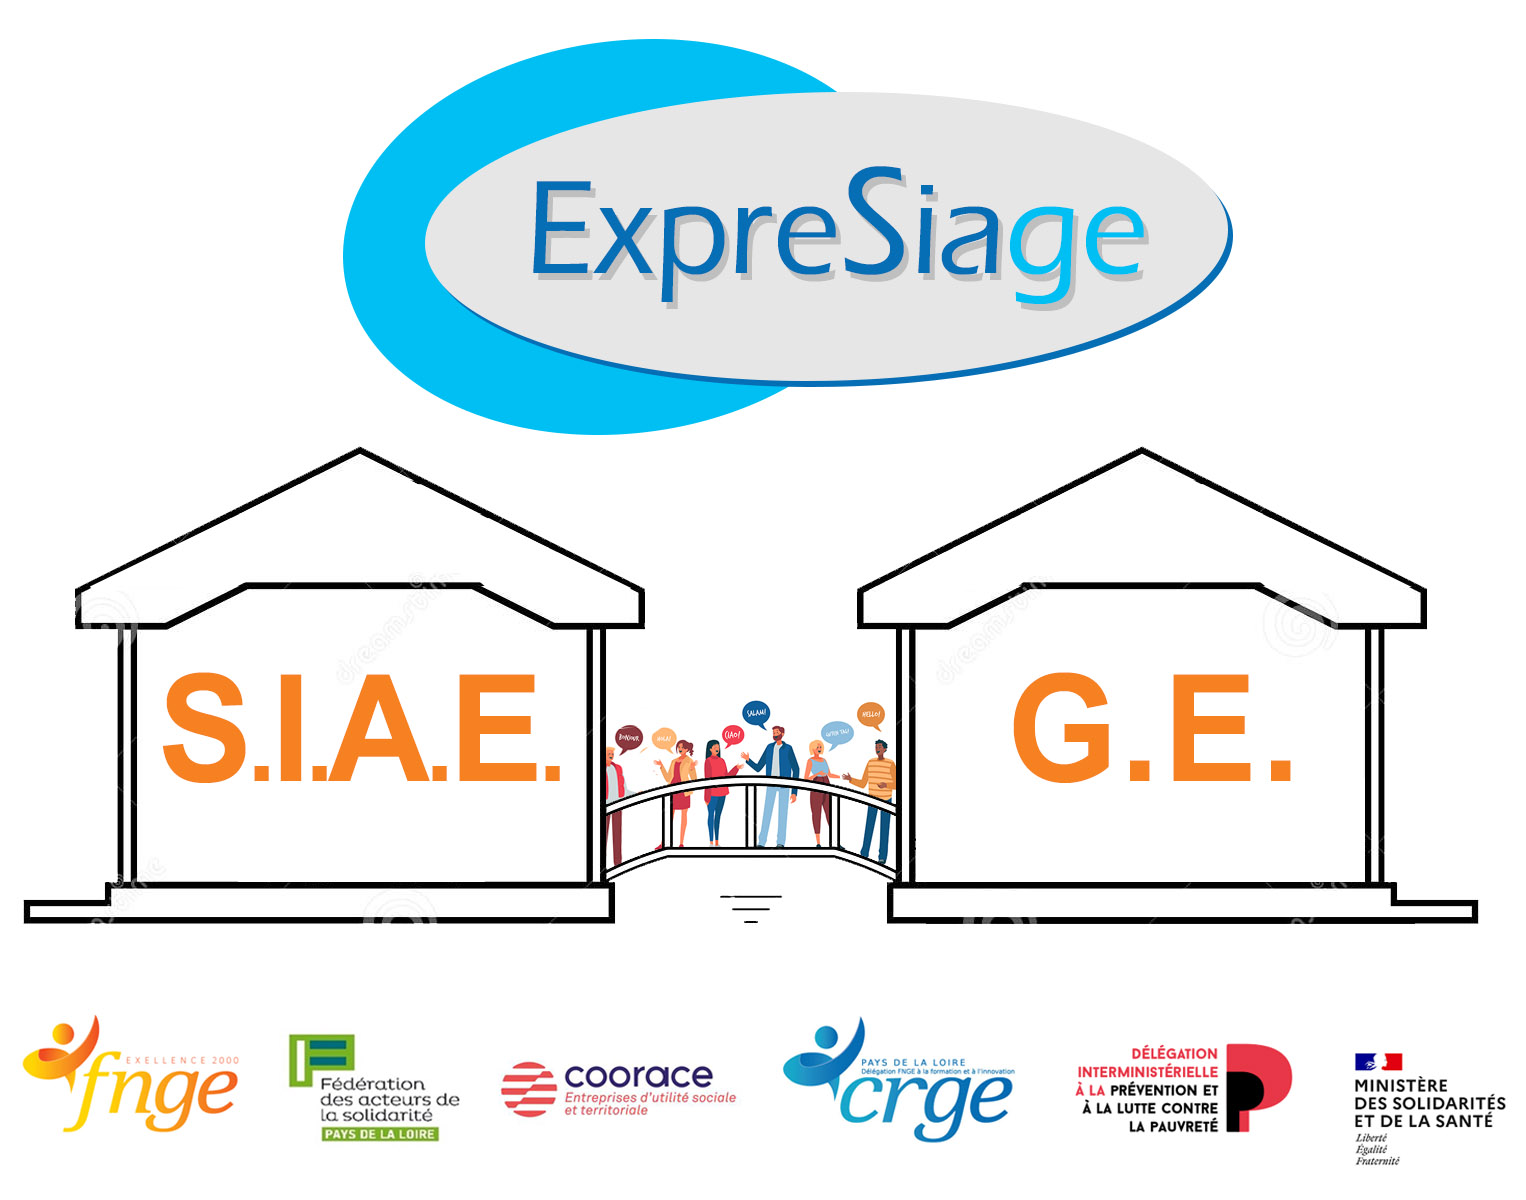 Expresiage_Crge_Siae_ge